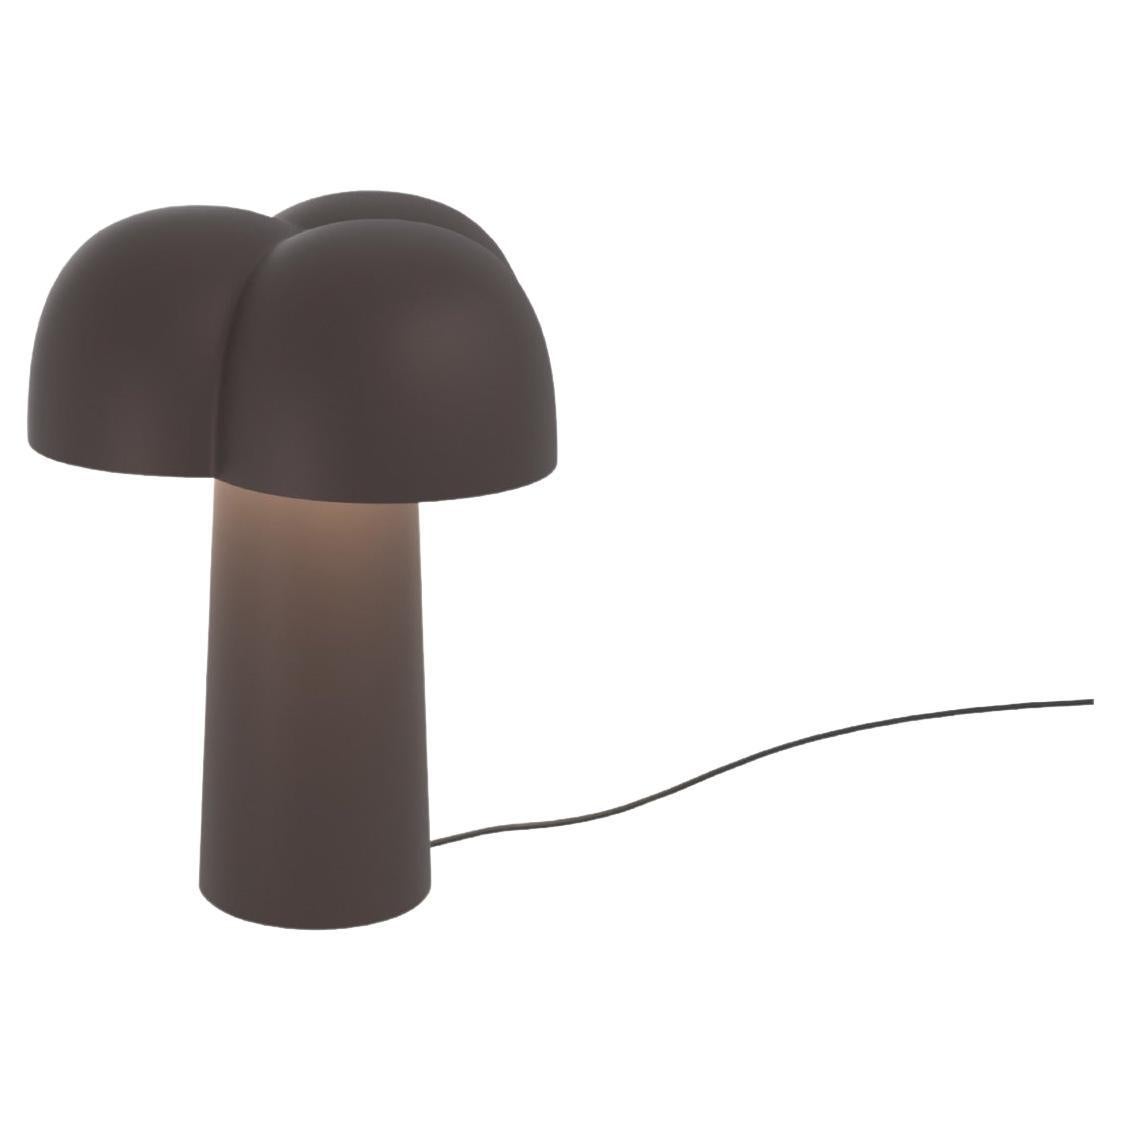 Lampe de bureau contemporaine 'Cotton' de Sebastian Herkner x AGO, couleur chocolat